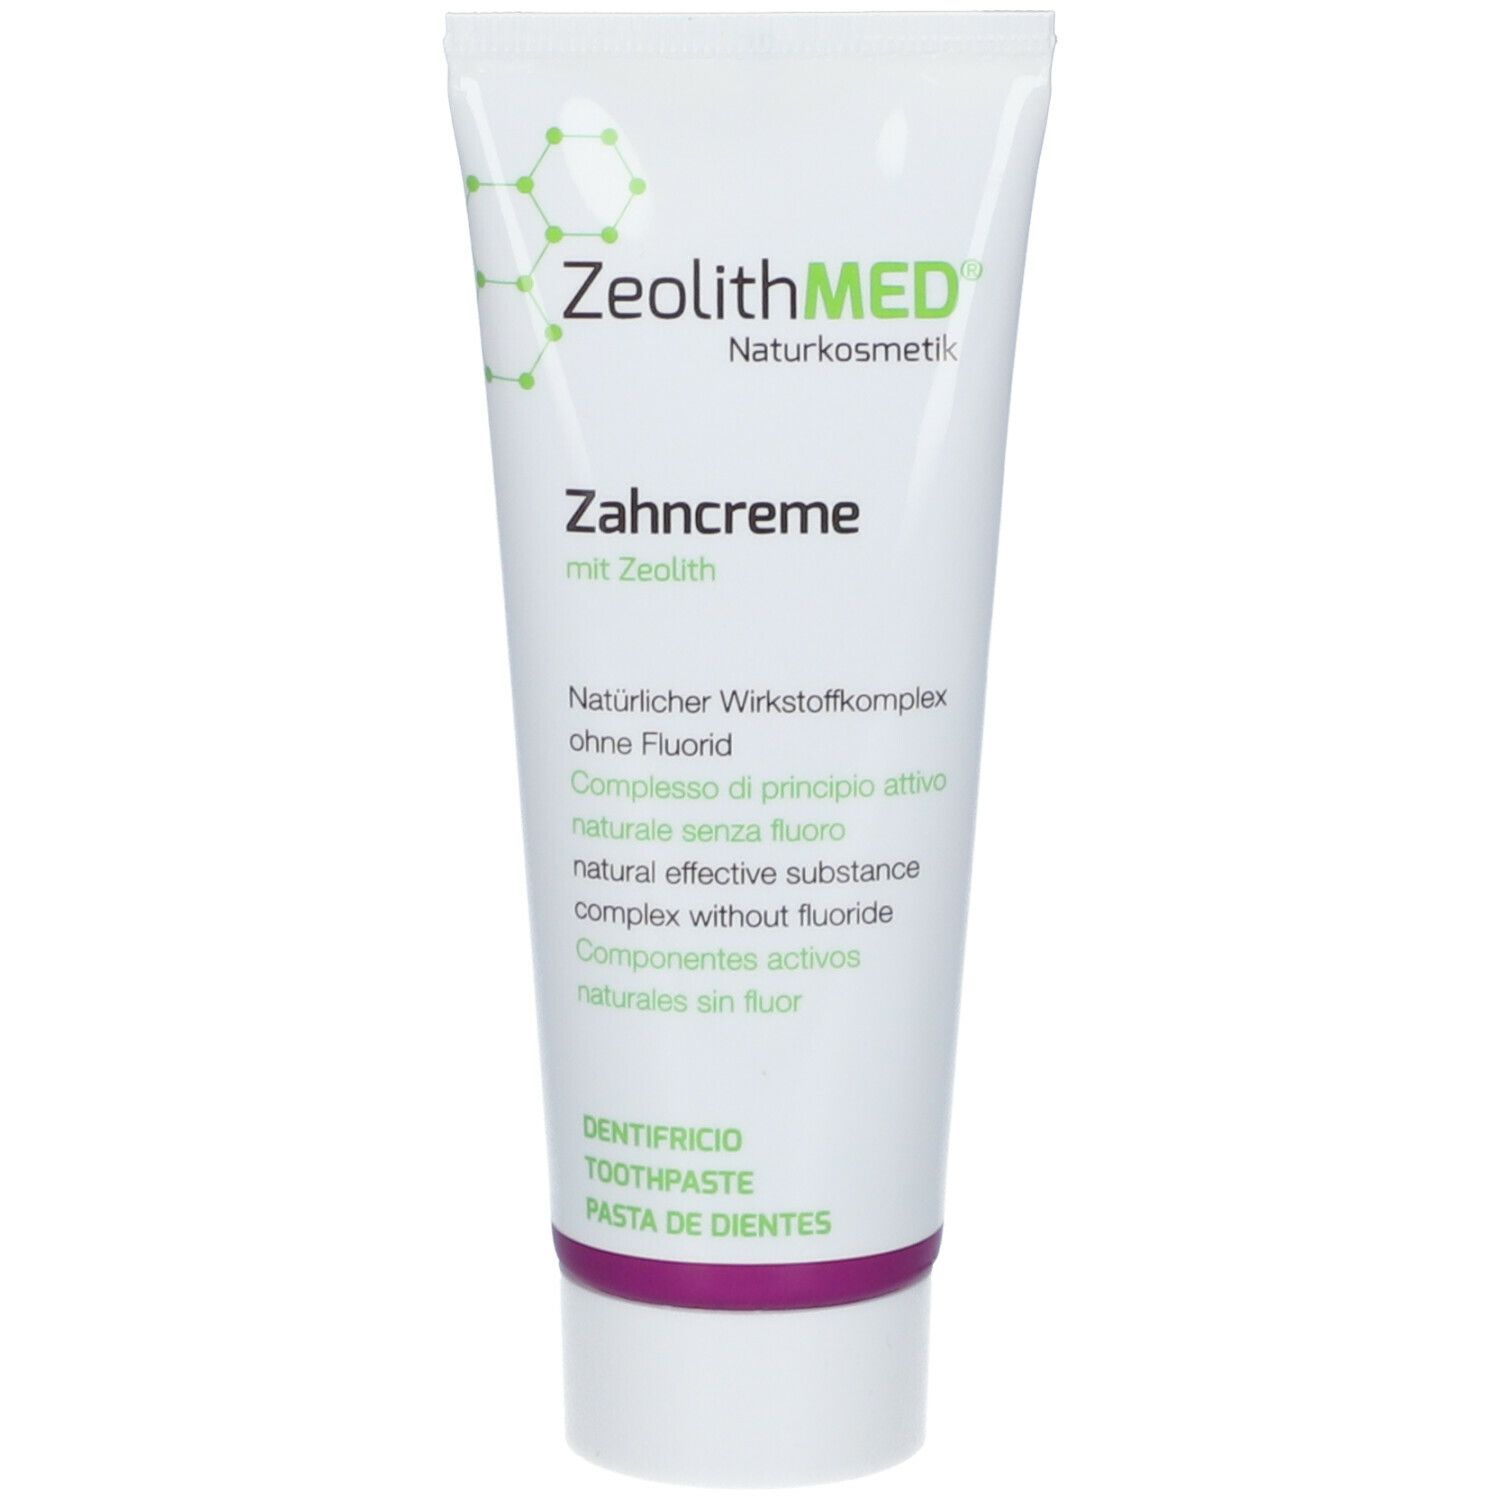 Image of ZeolithMED® Zahncreme